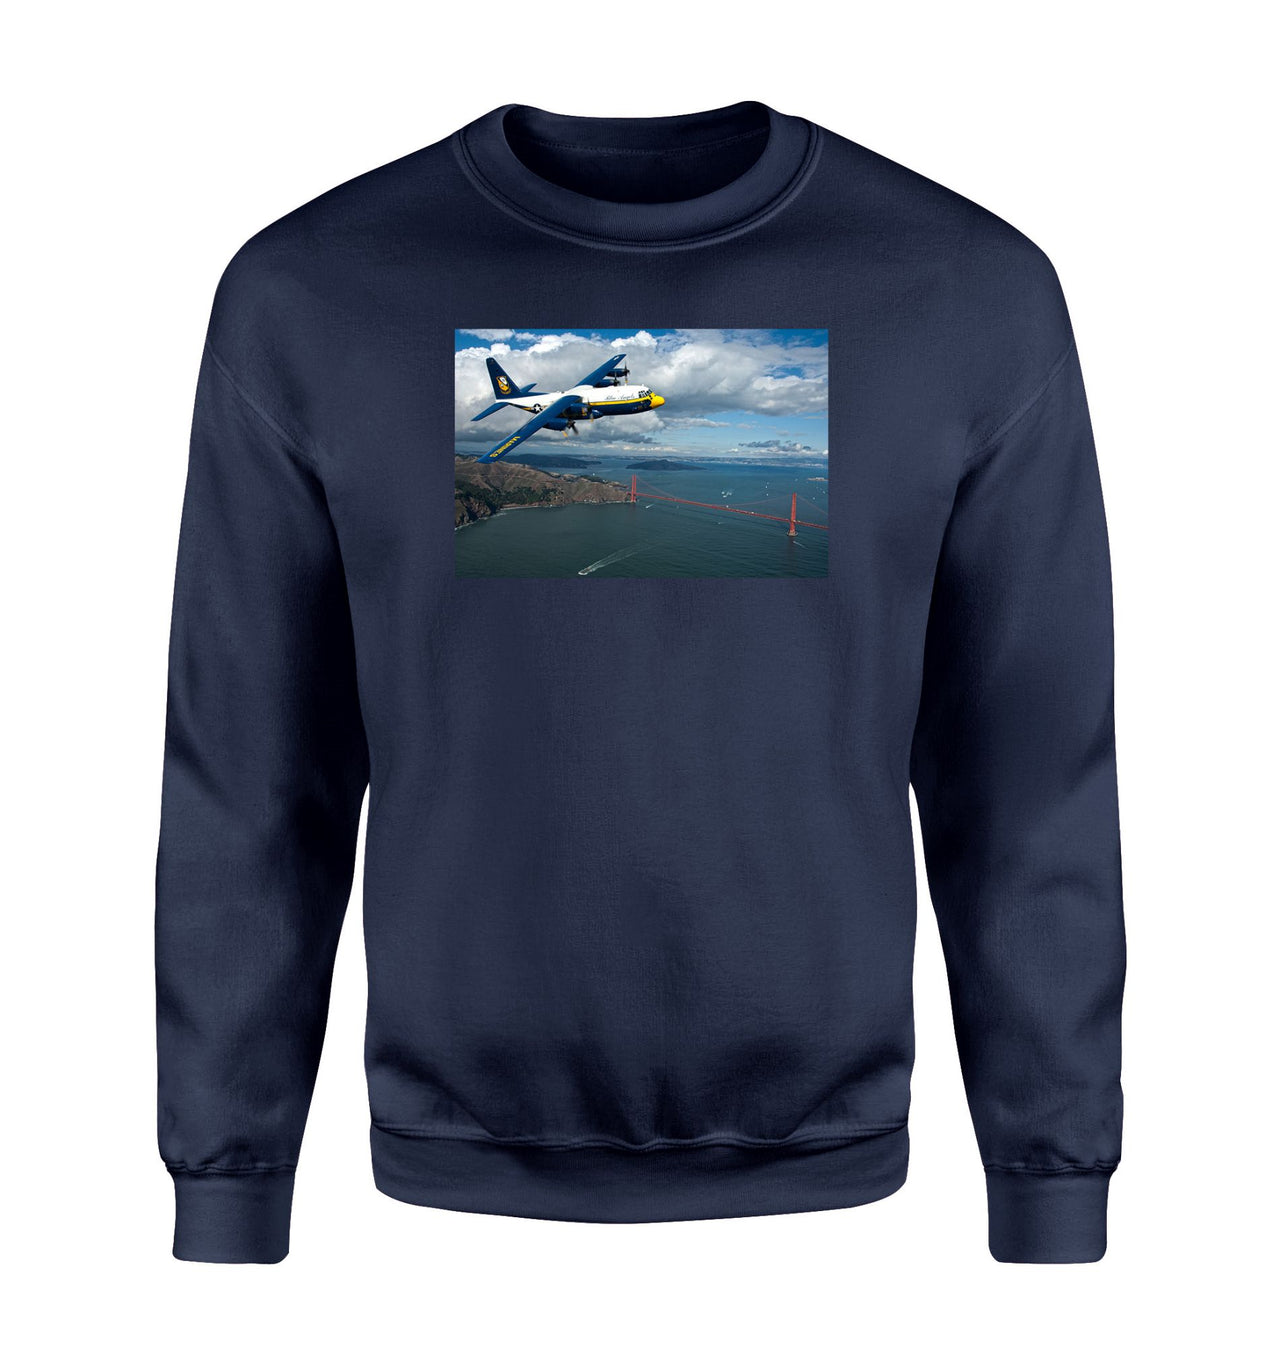 Blue Angels & Bridge Designed Sweatshirts